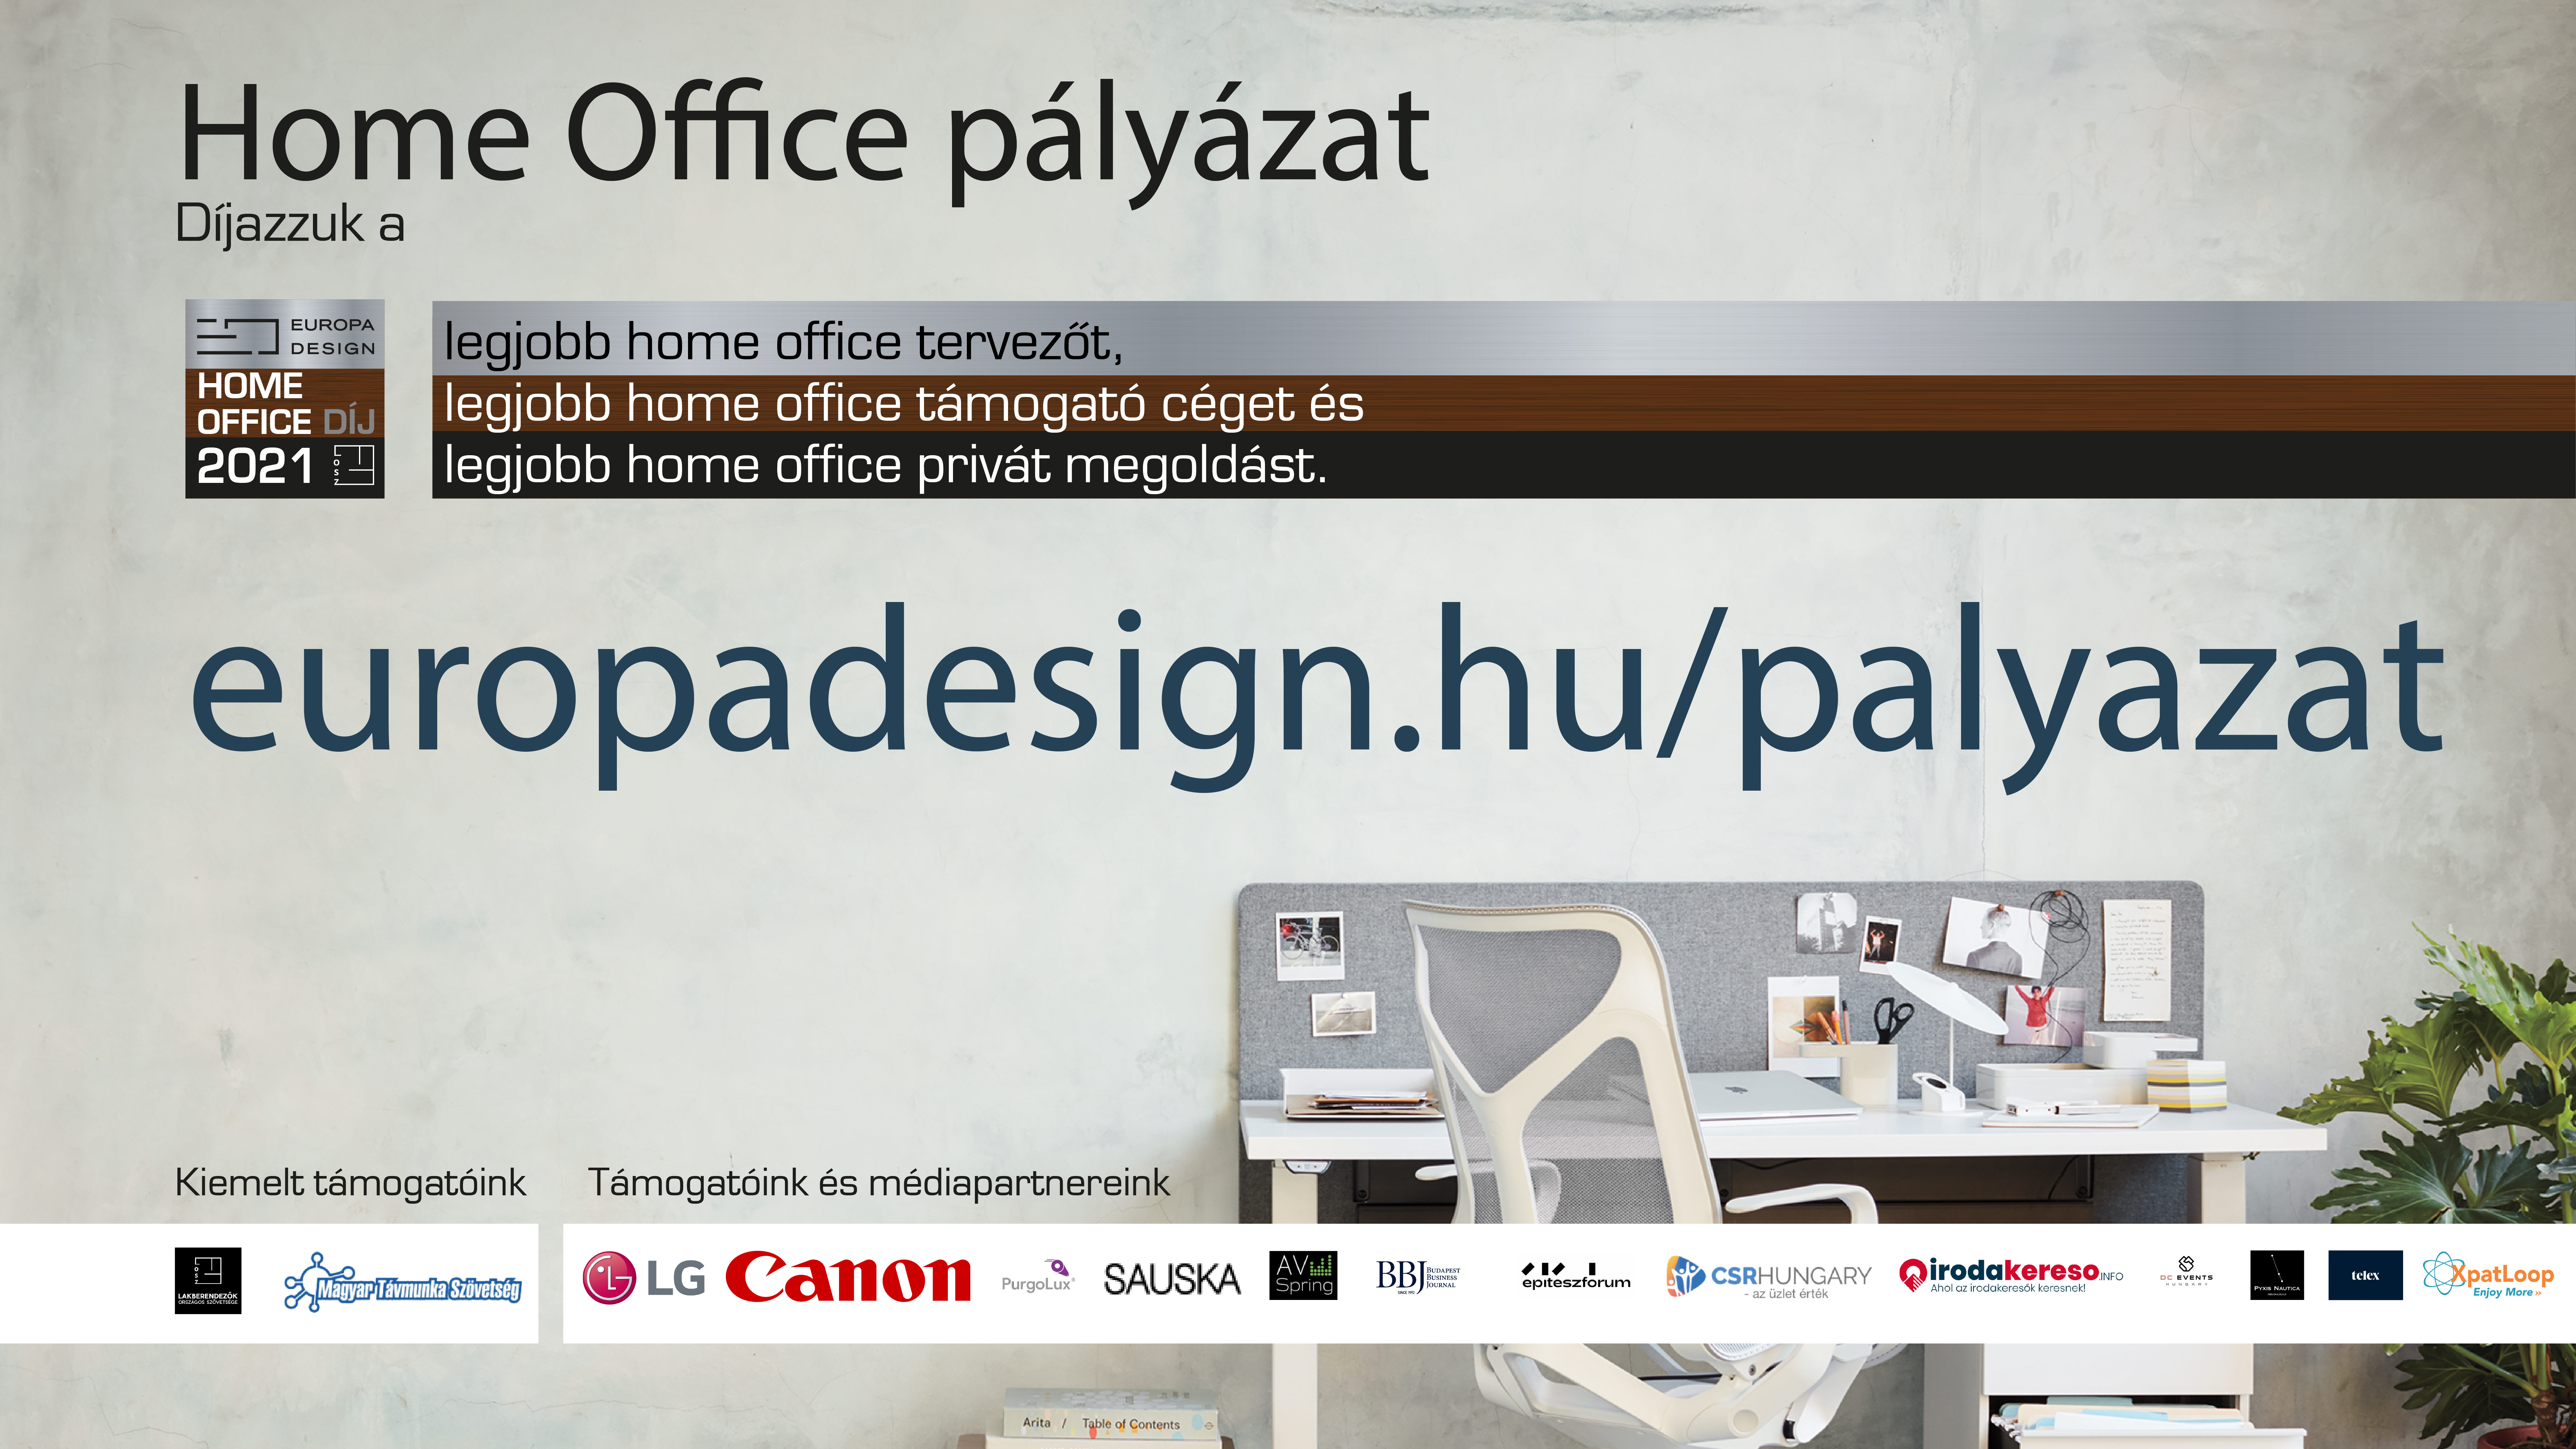 HOME OFFICE PÁLYÁZAT